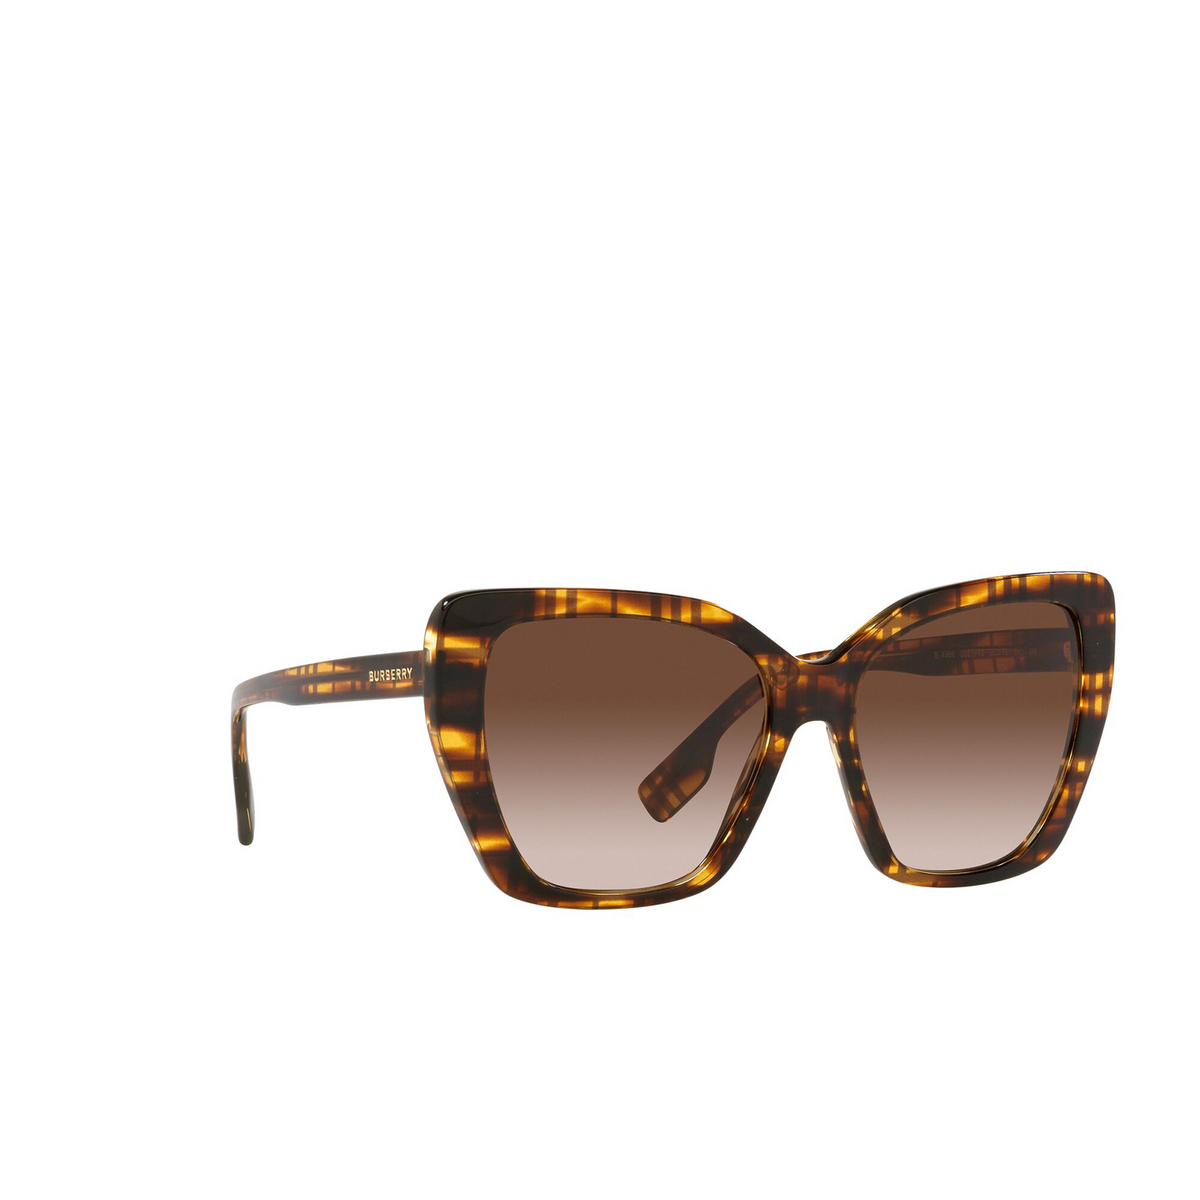 Burberry TASMIN Sunglasses 398113 Top Check / Striped Brown - three-quarters view